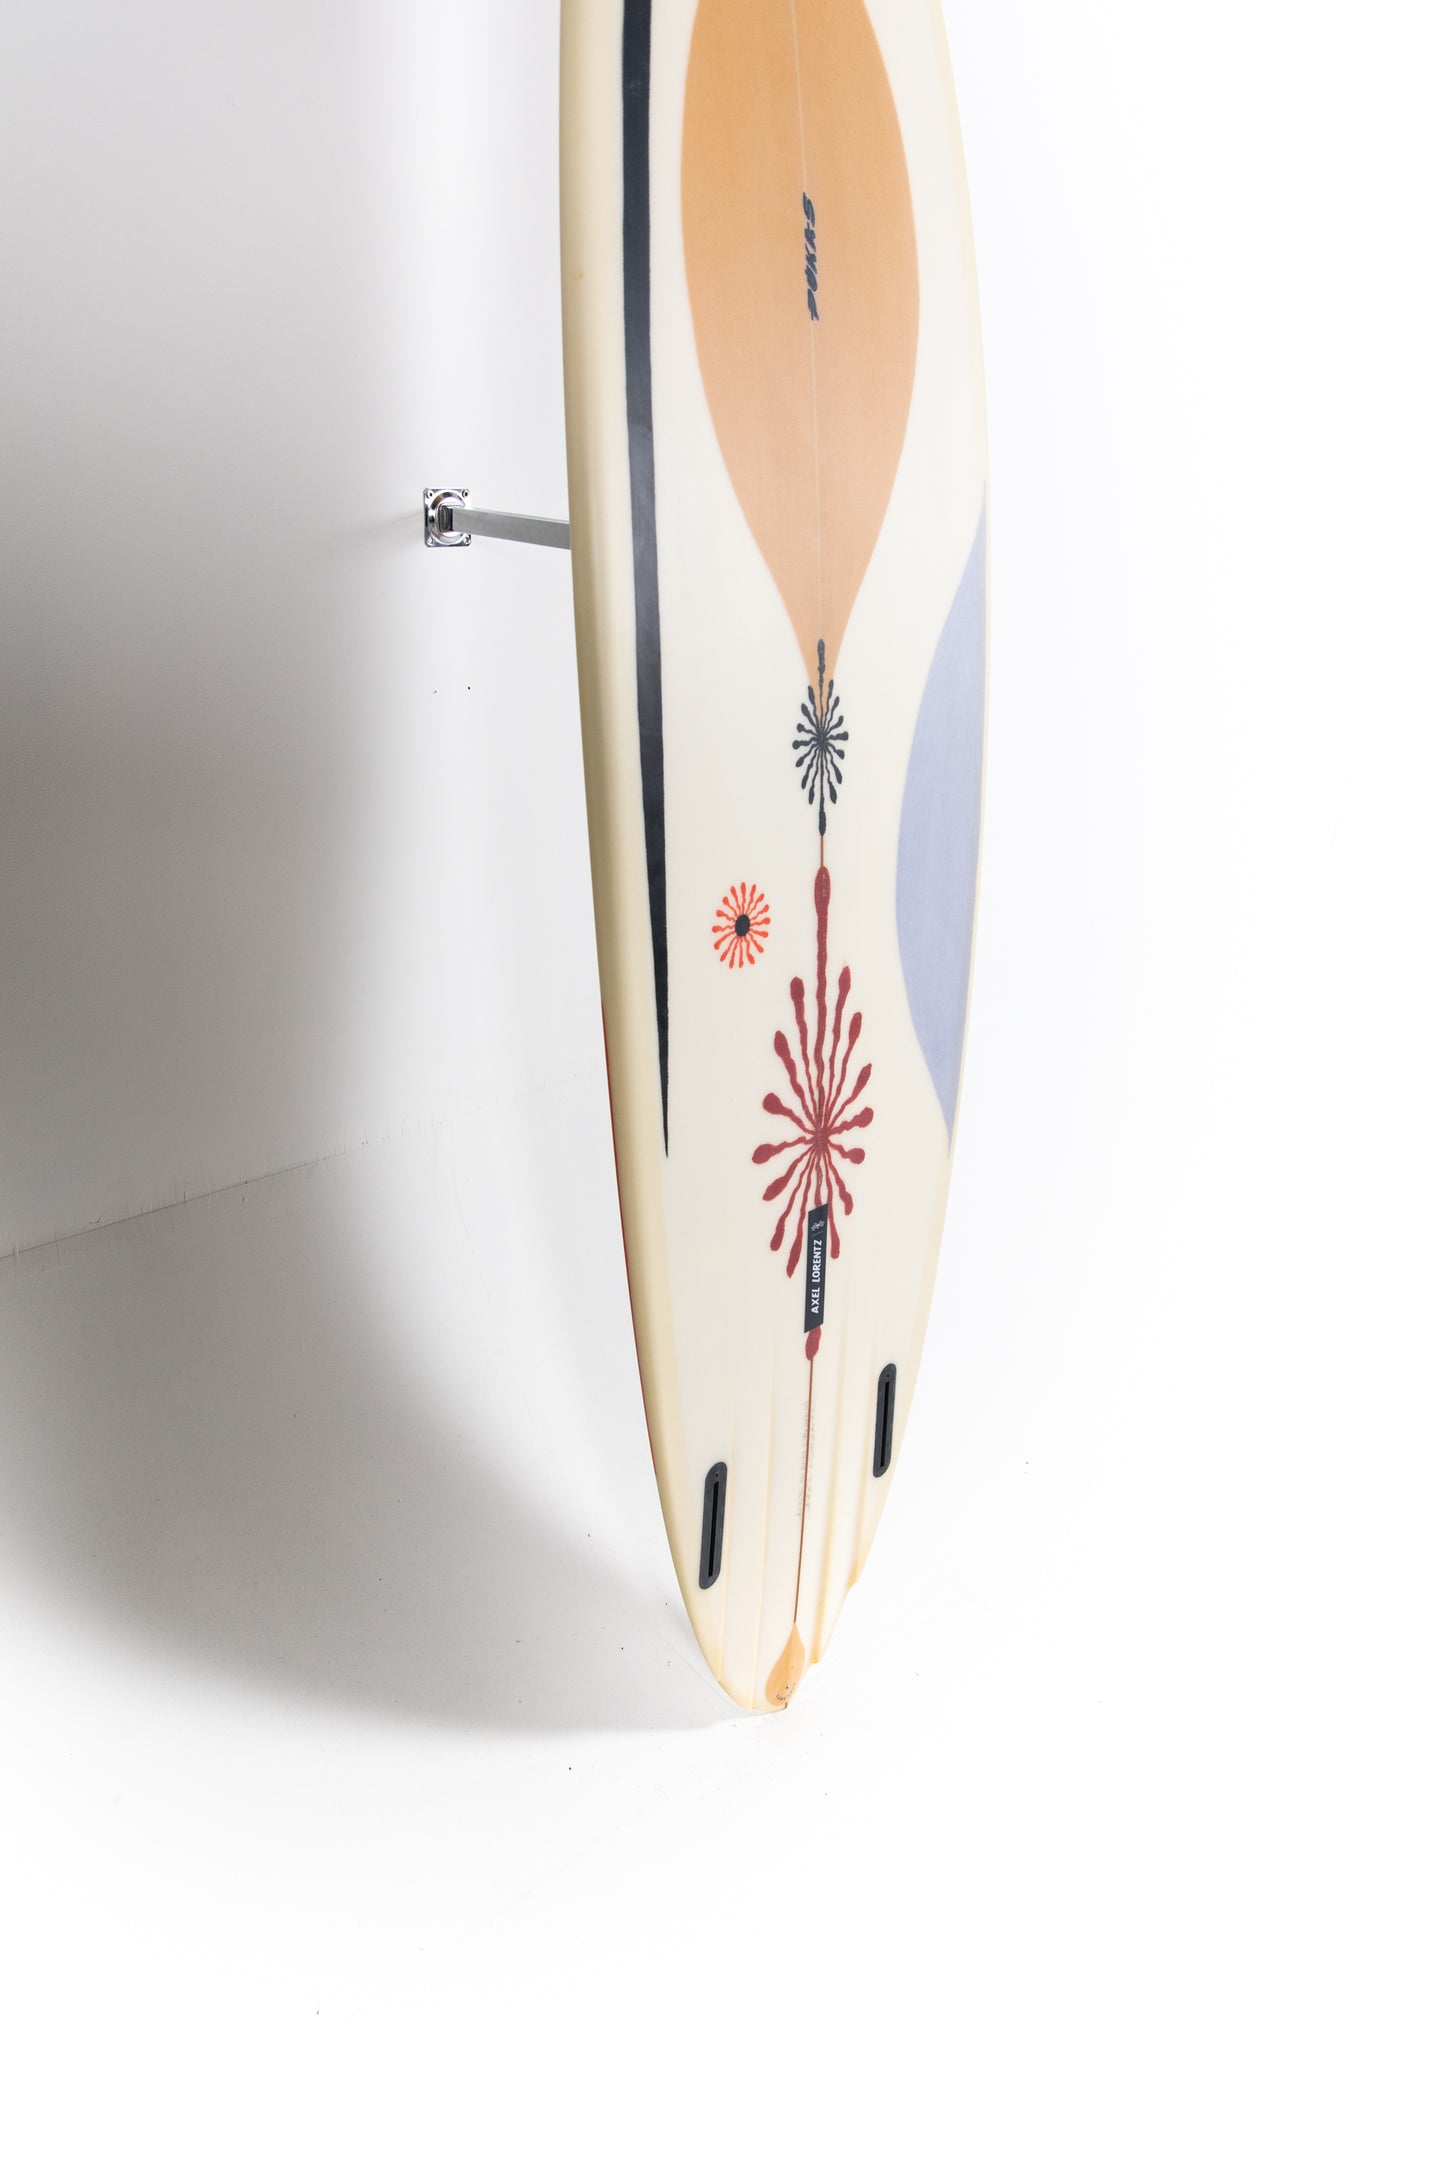 
                  
                    Pukas Surf shop - Pukas Surfboard - LADY TWIN by Axel Lorentz - 7’0” x 21,25 x 2,94 - 46L - AX07590
                  
                